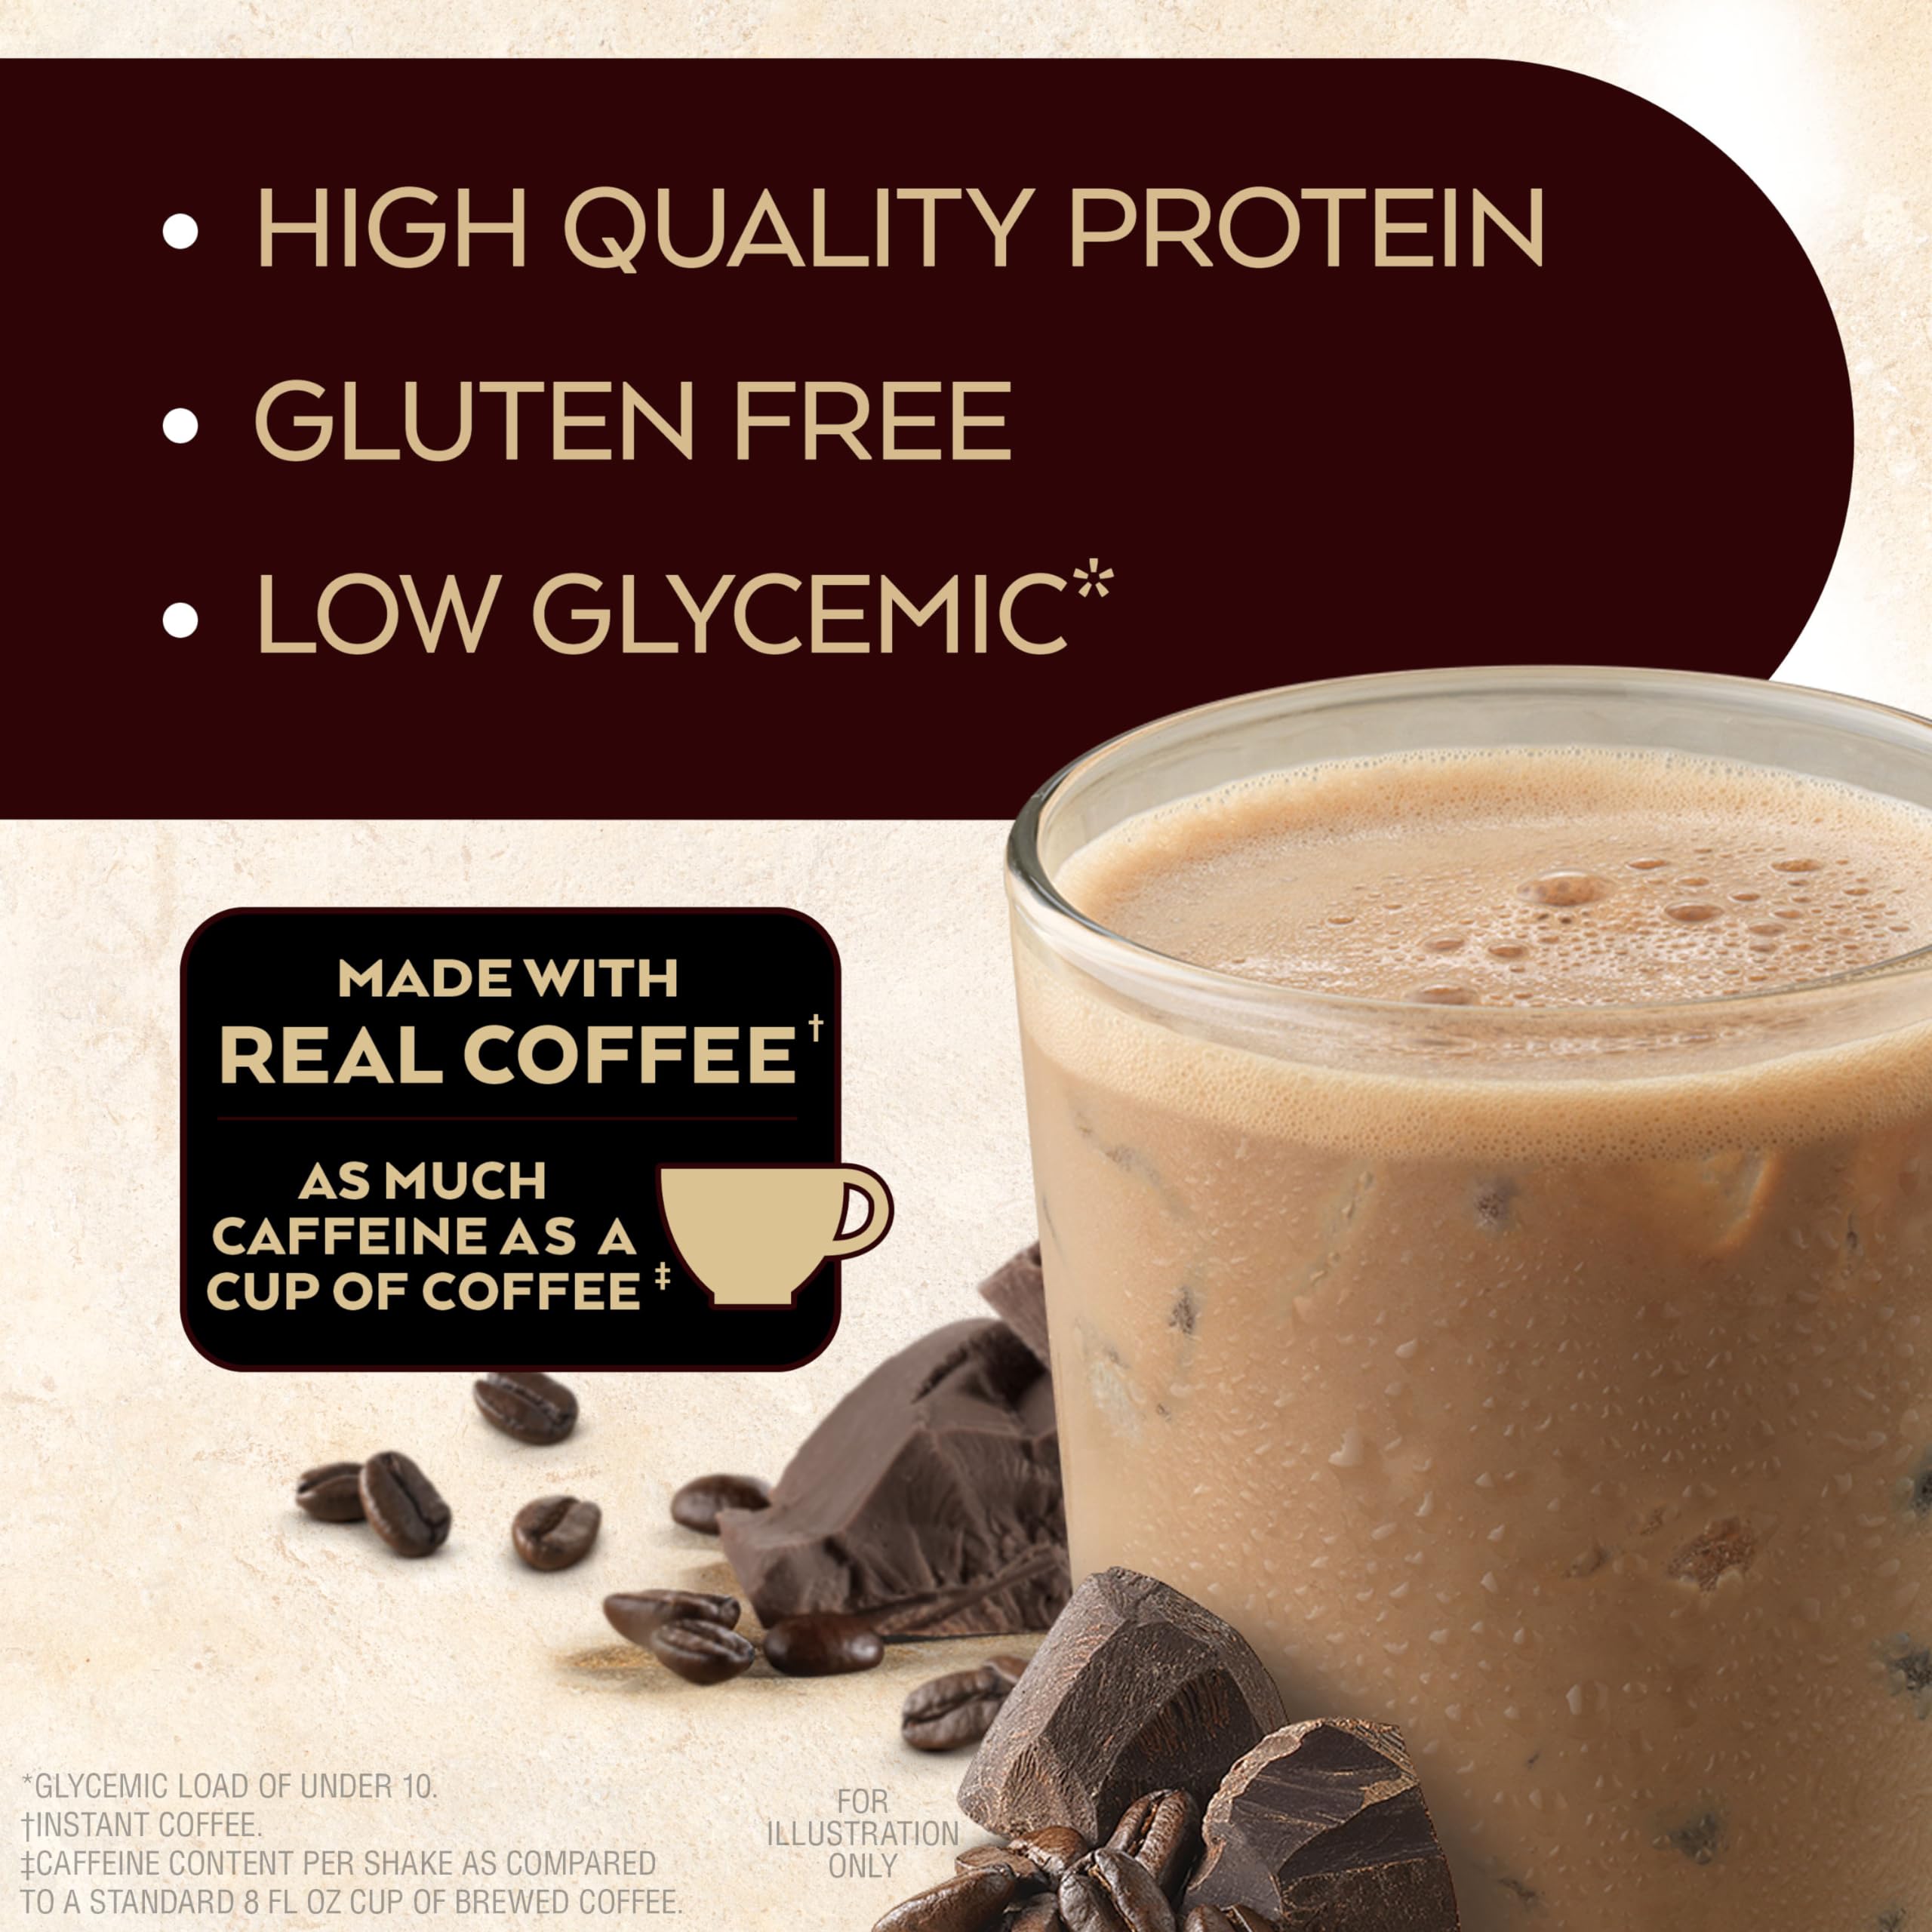 Atkins Dark Chocolate Royale Protein Shake & Mocha Latte Iced Coffee Protein Shake, 15g Protein, Low Glycemic, 4g Net Carb, 1g Sugar, Keto Friendly.